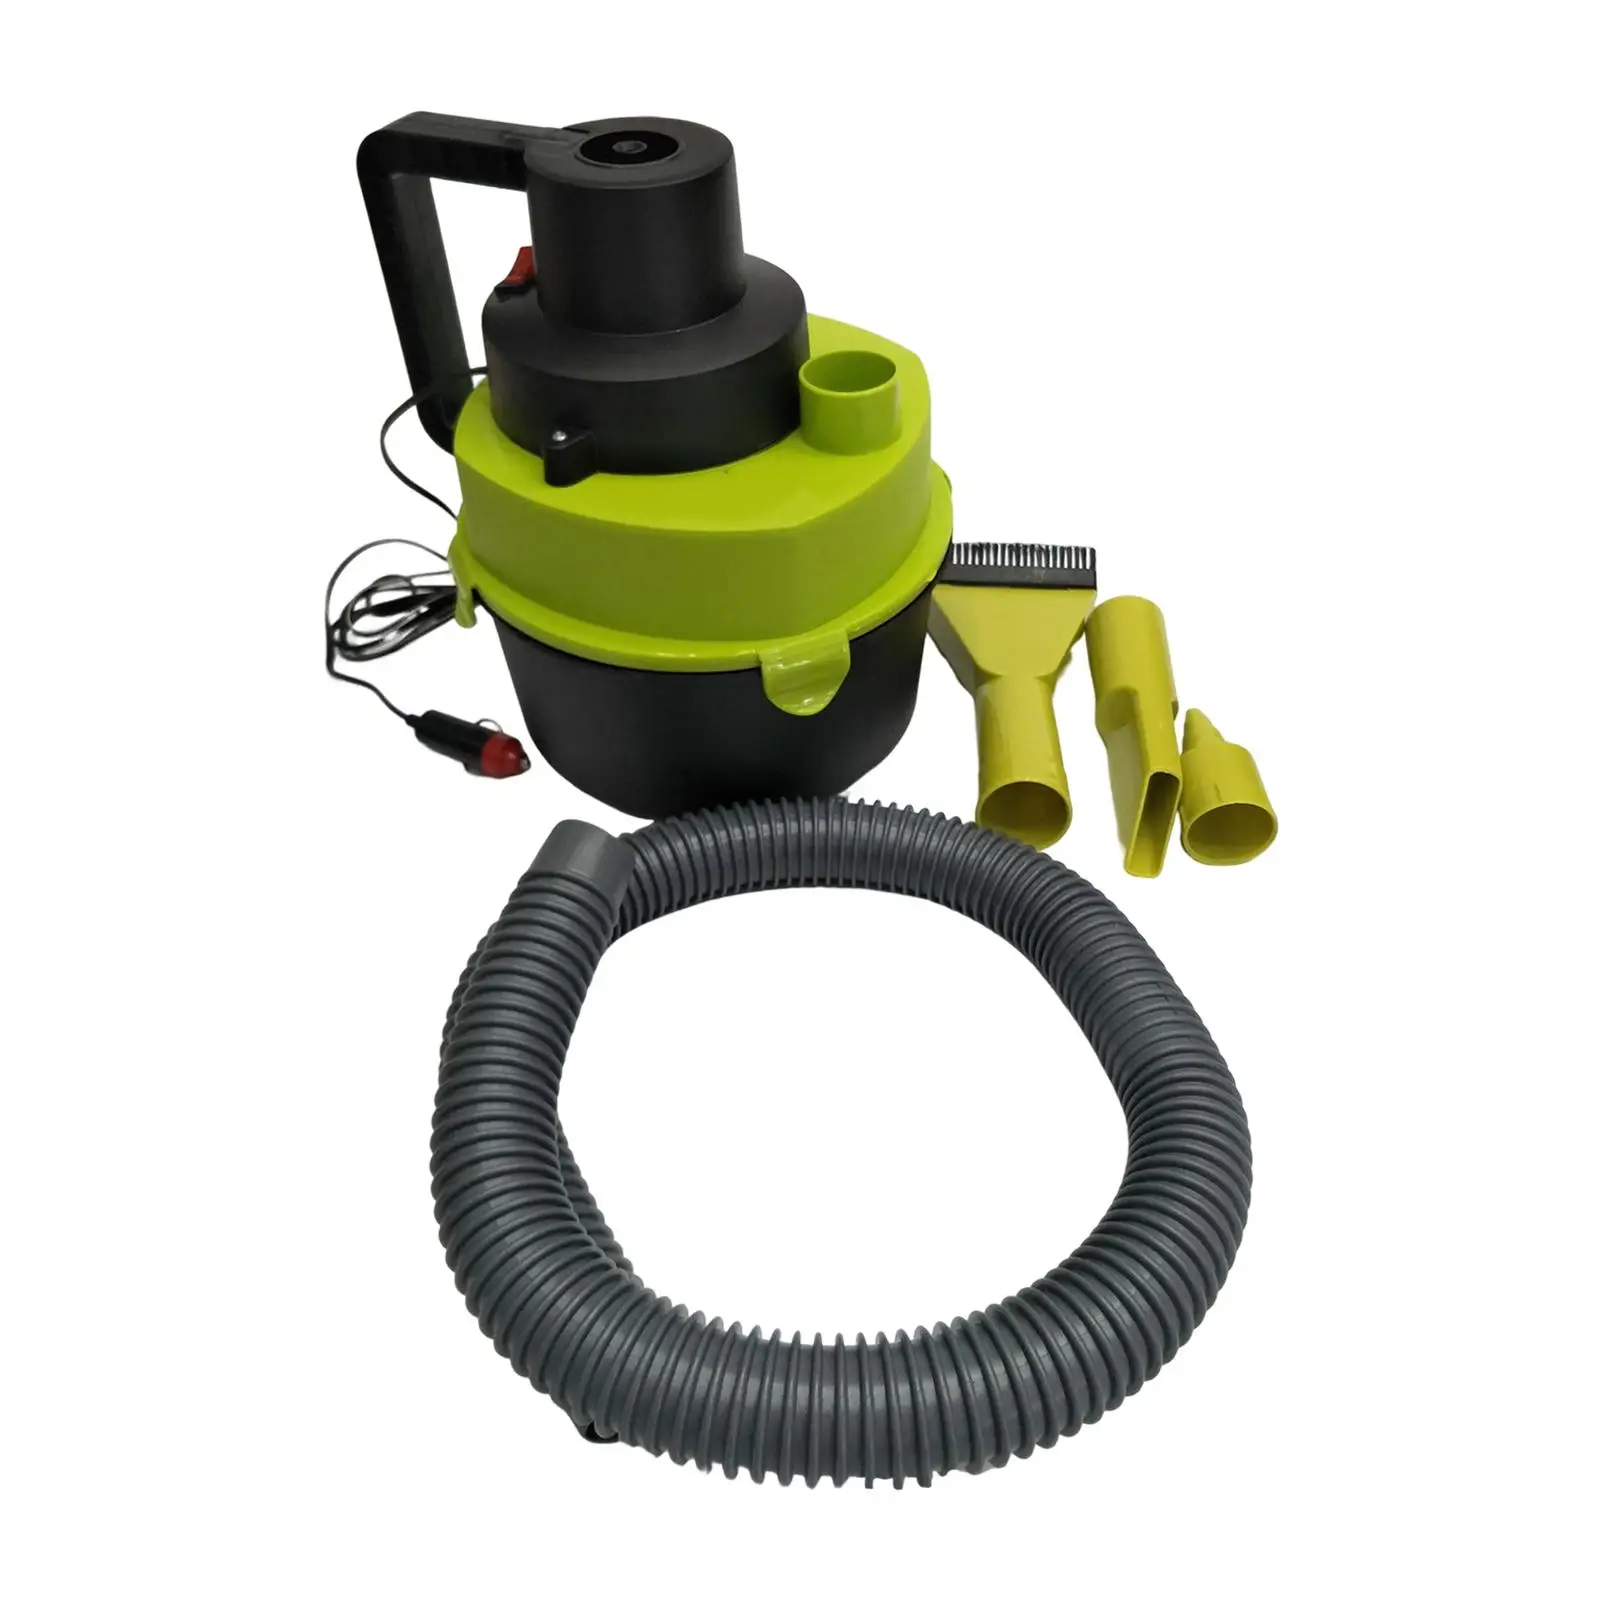 Shop Vacuum Cleaner Handheld dry wet Vacuum for Basement Trucks Window Seams